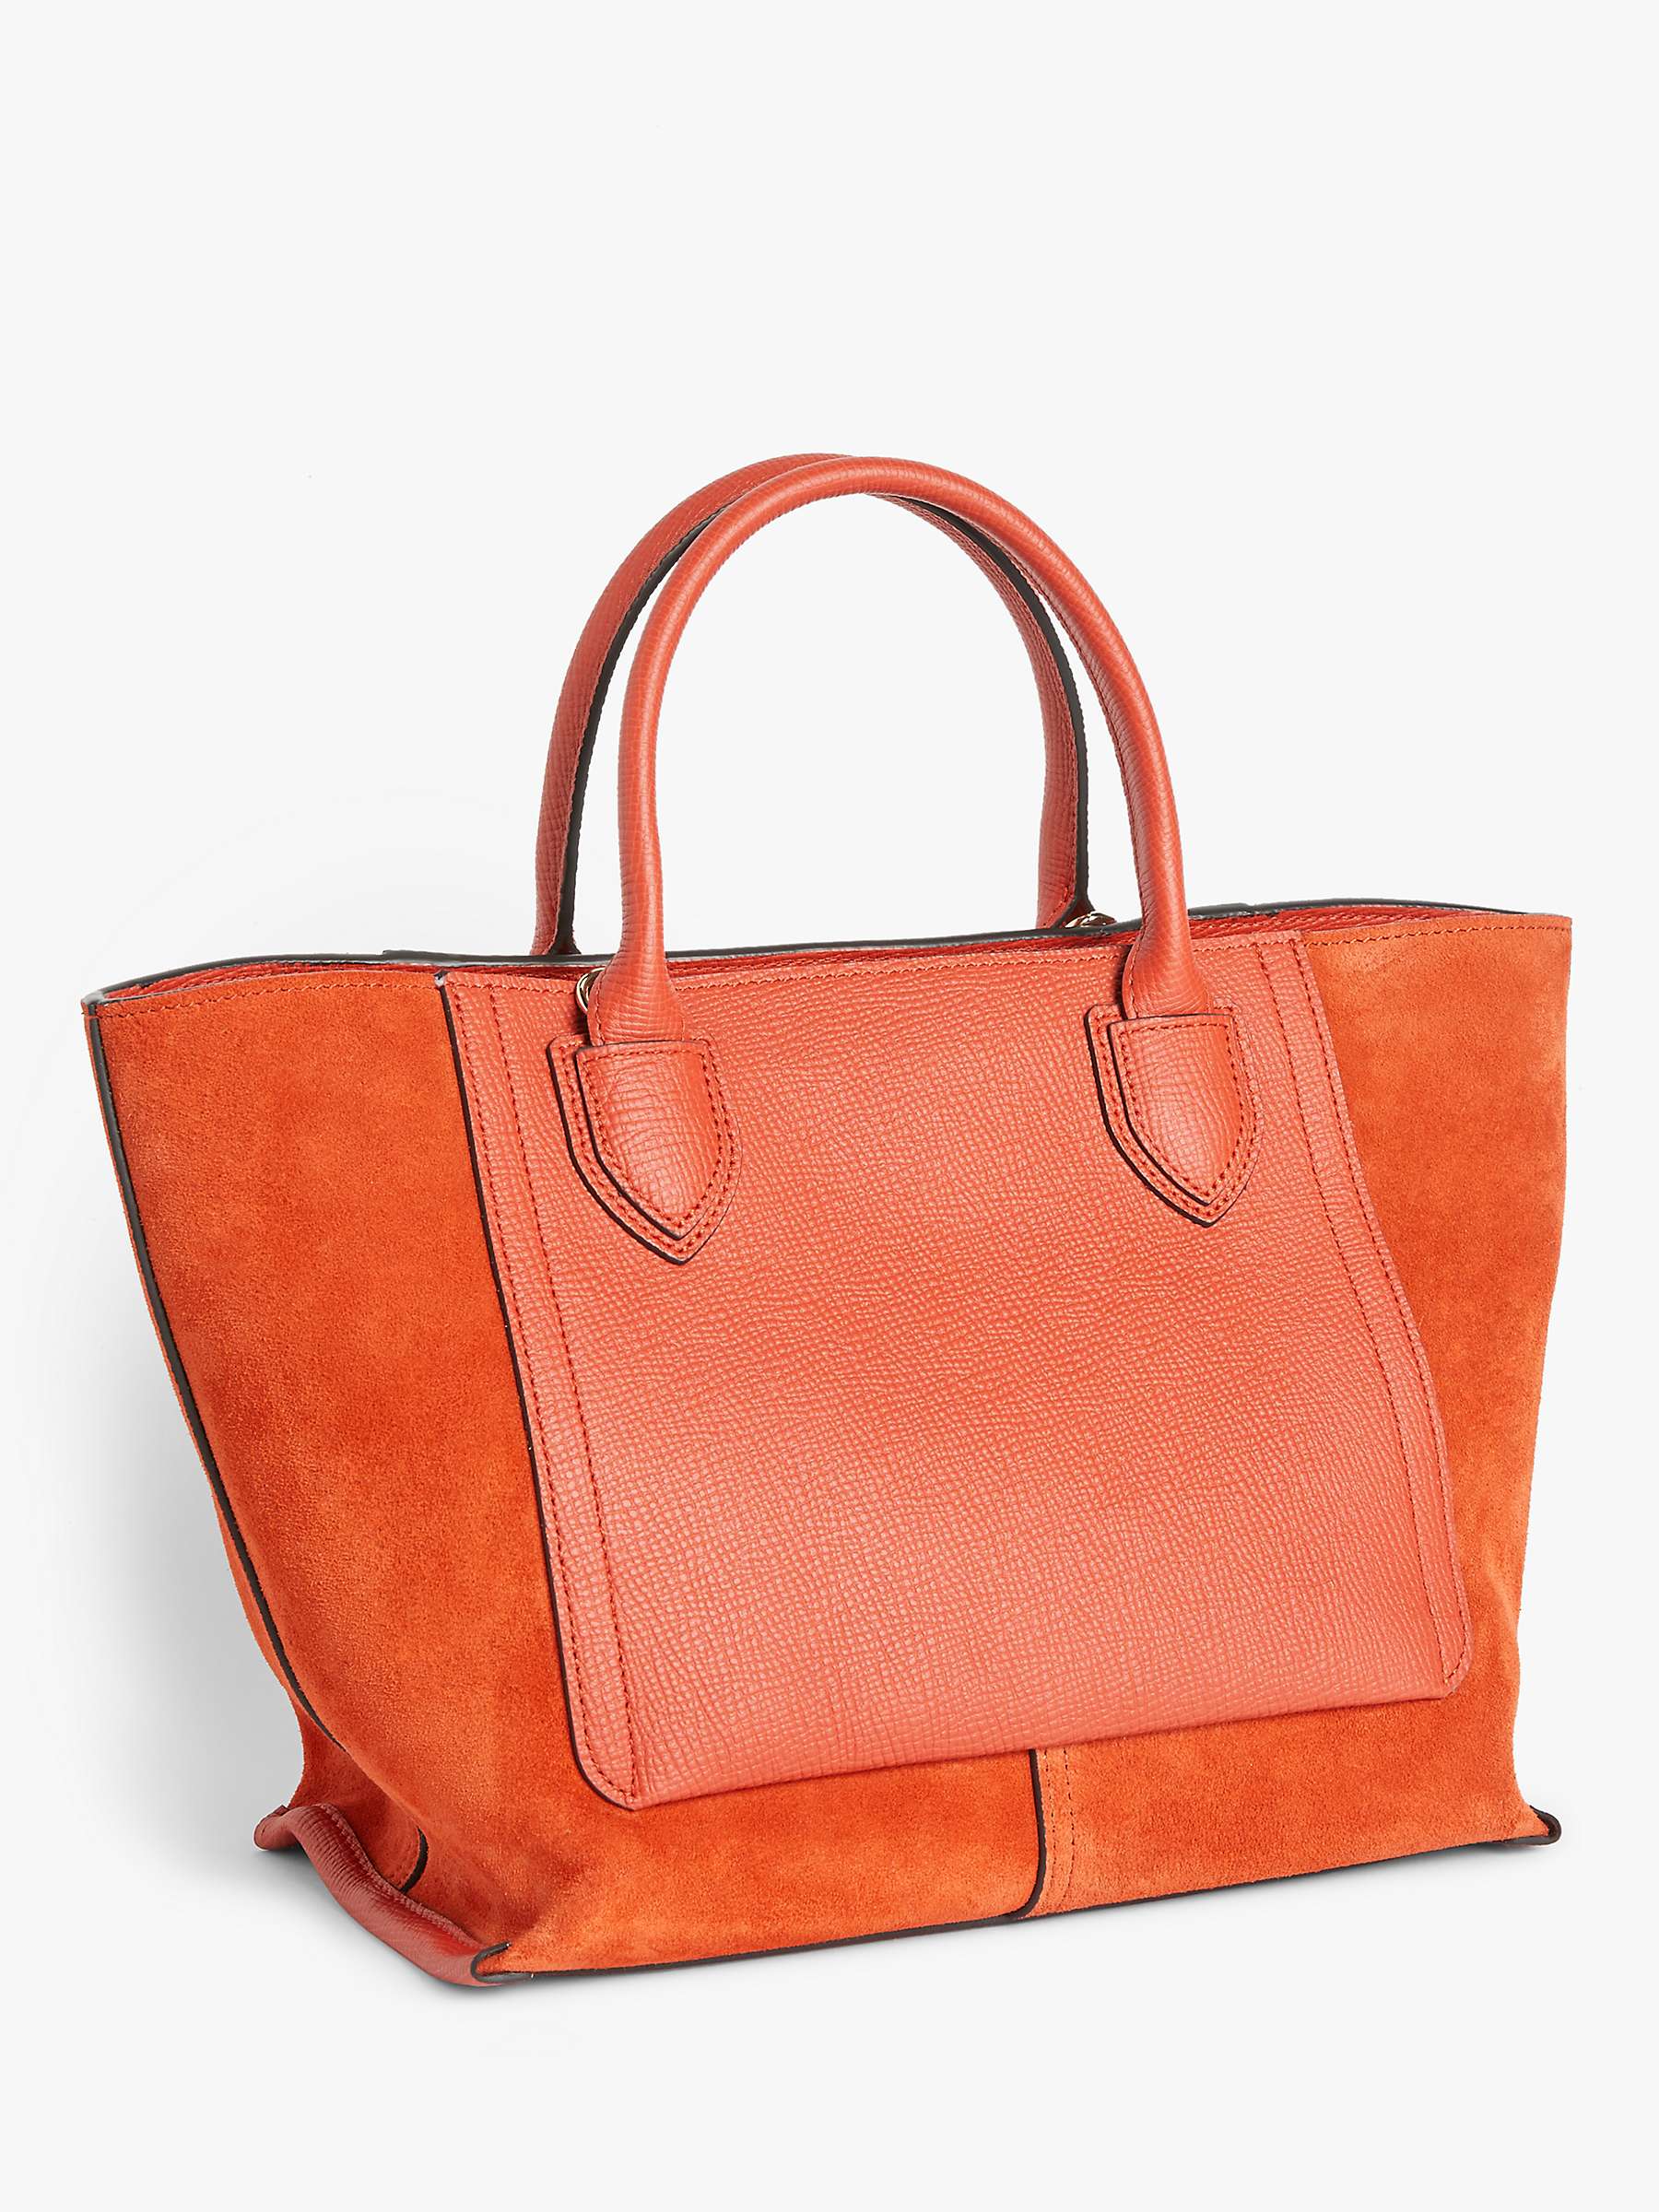 Buy Longchamp Mailbox Medium Suede Leather Top Handle Bag Online at johnlewis.com